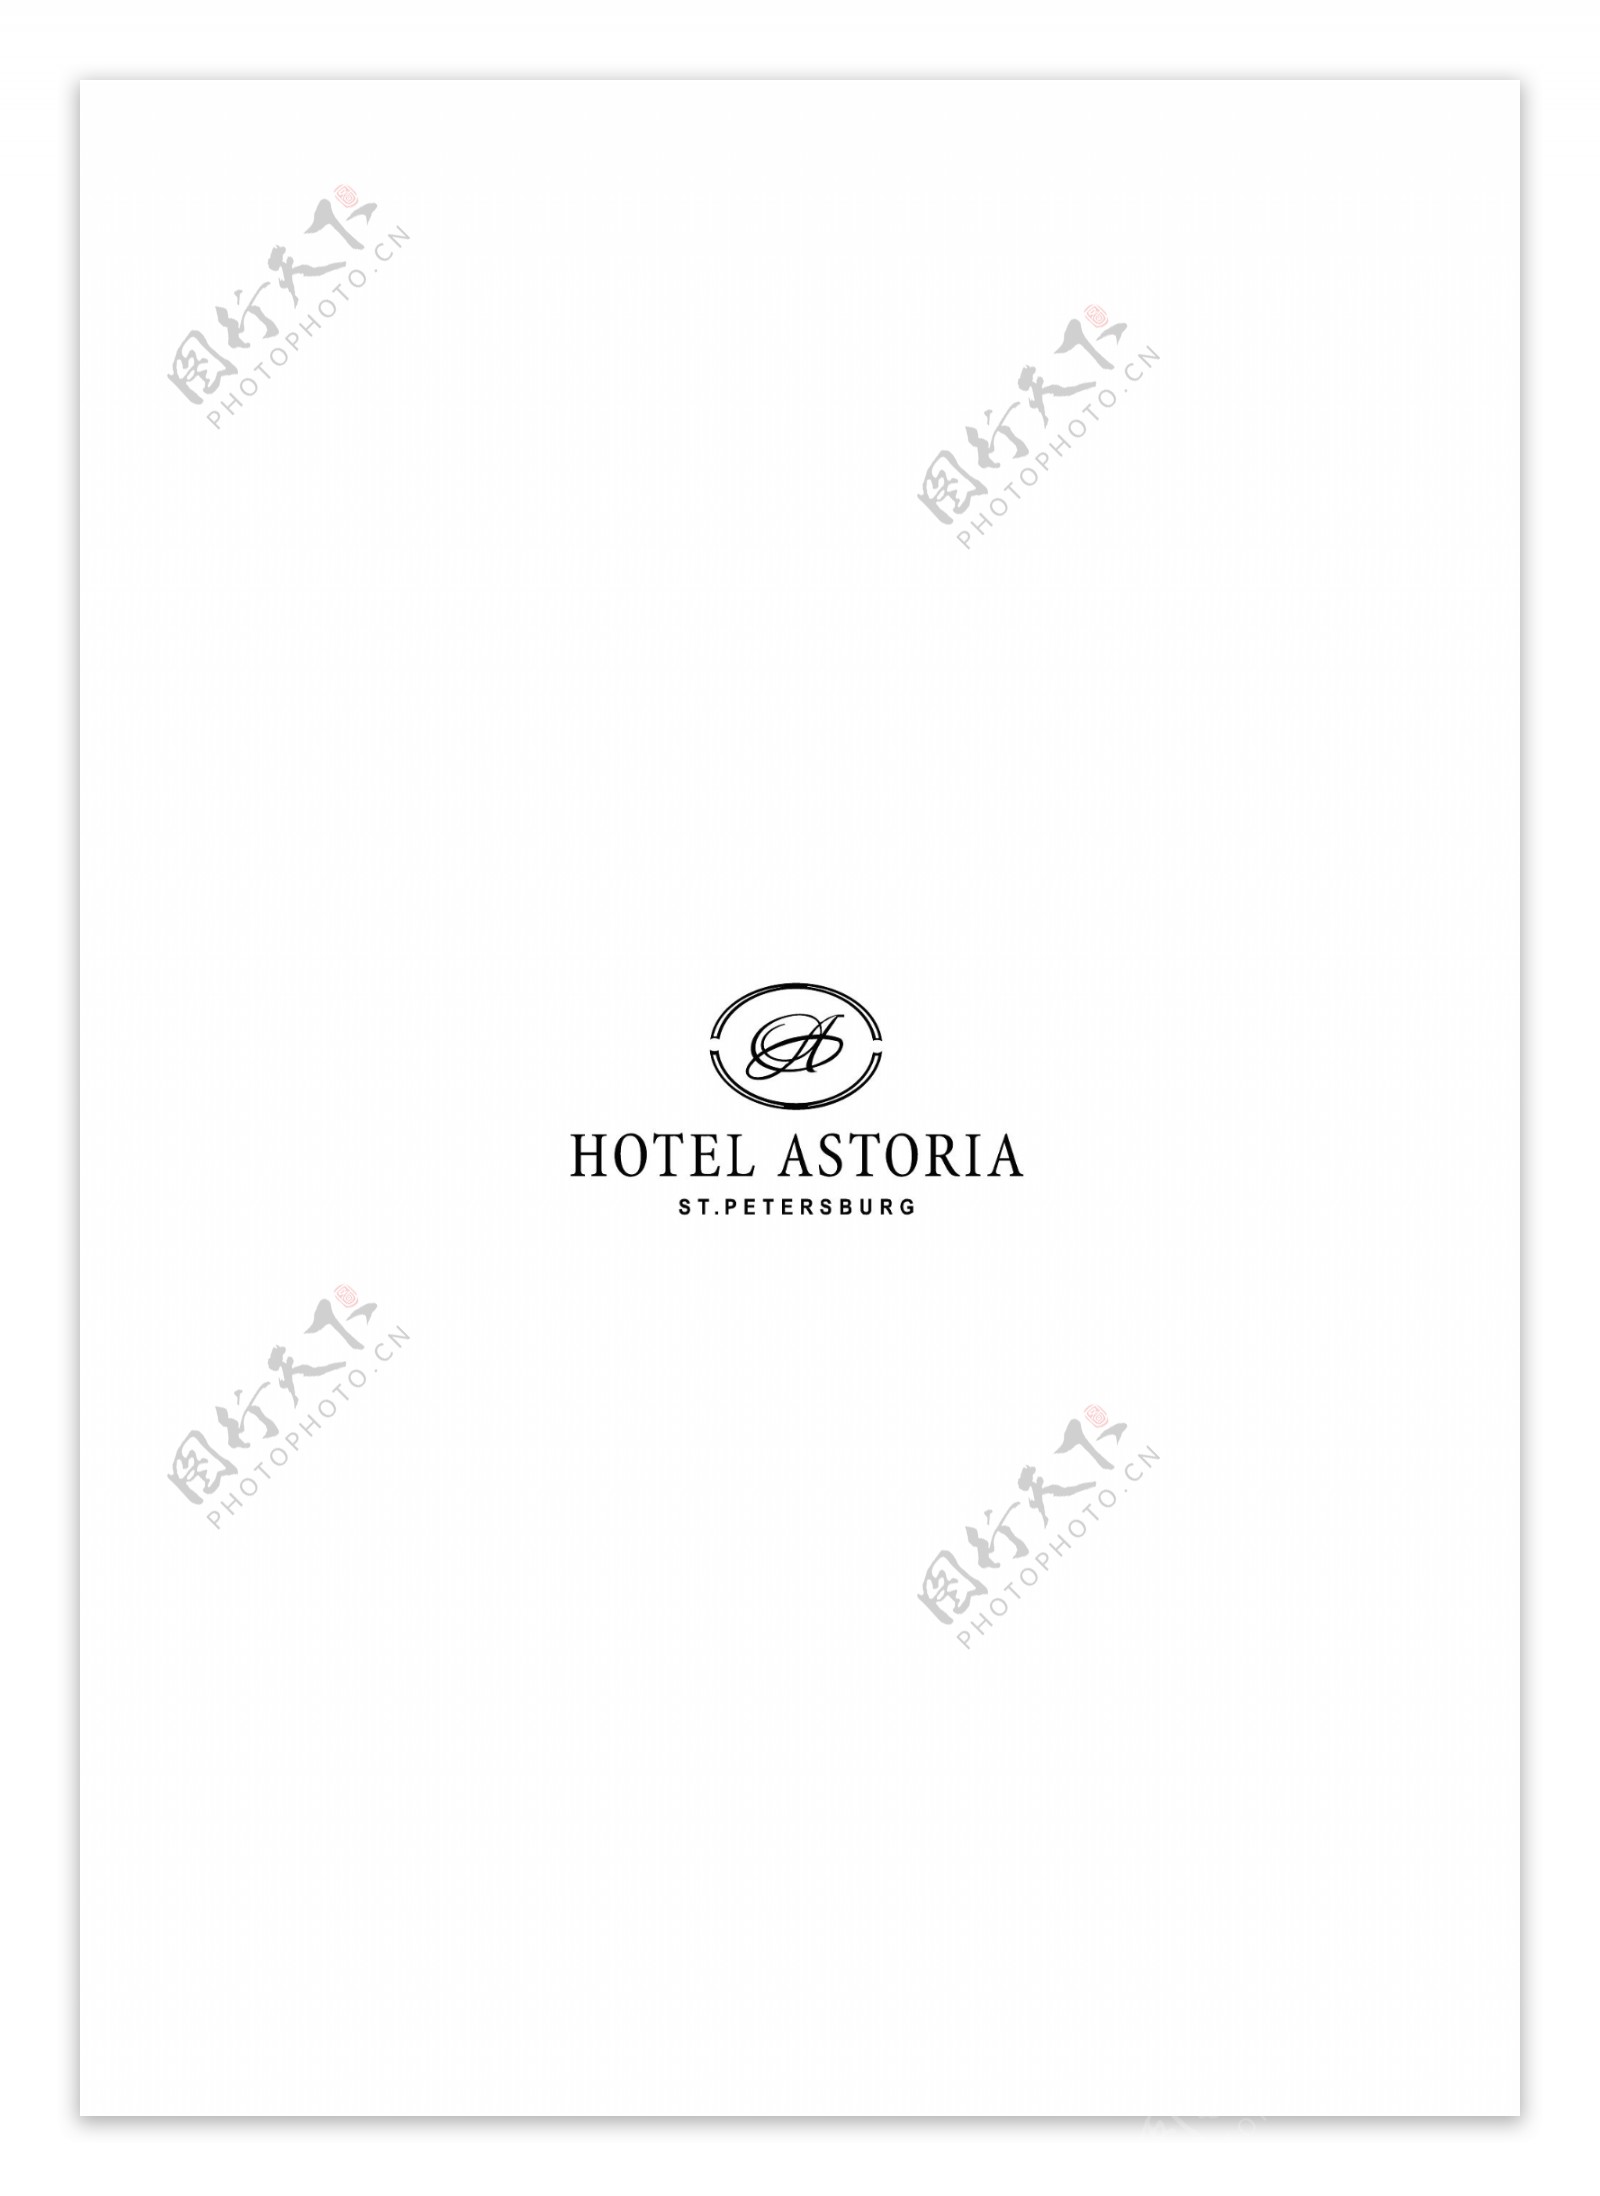 AstoriaHotel1logo设计欣赏AstoriaHotel1酒店业标志下载标志设计欣赏